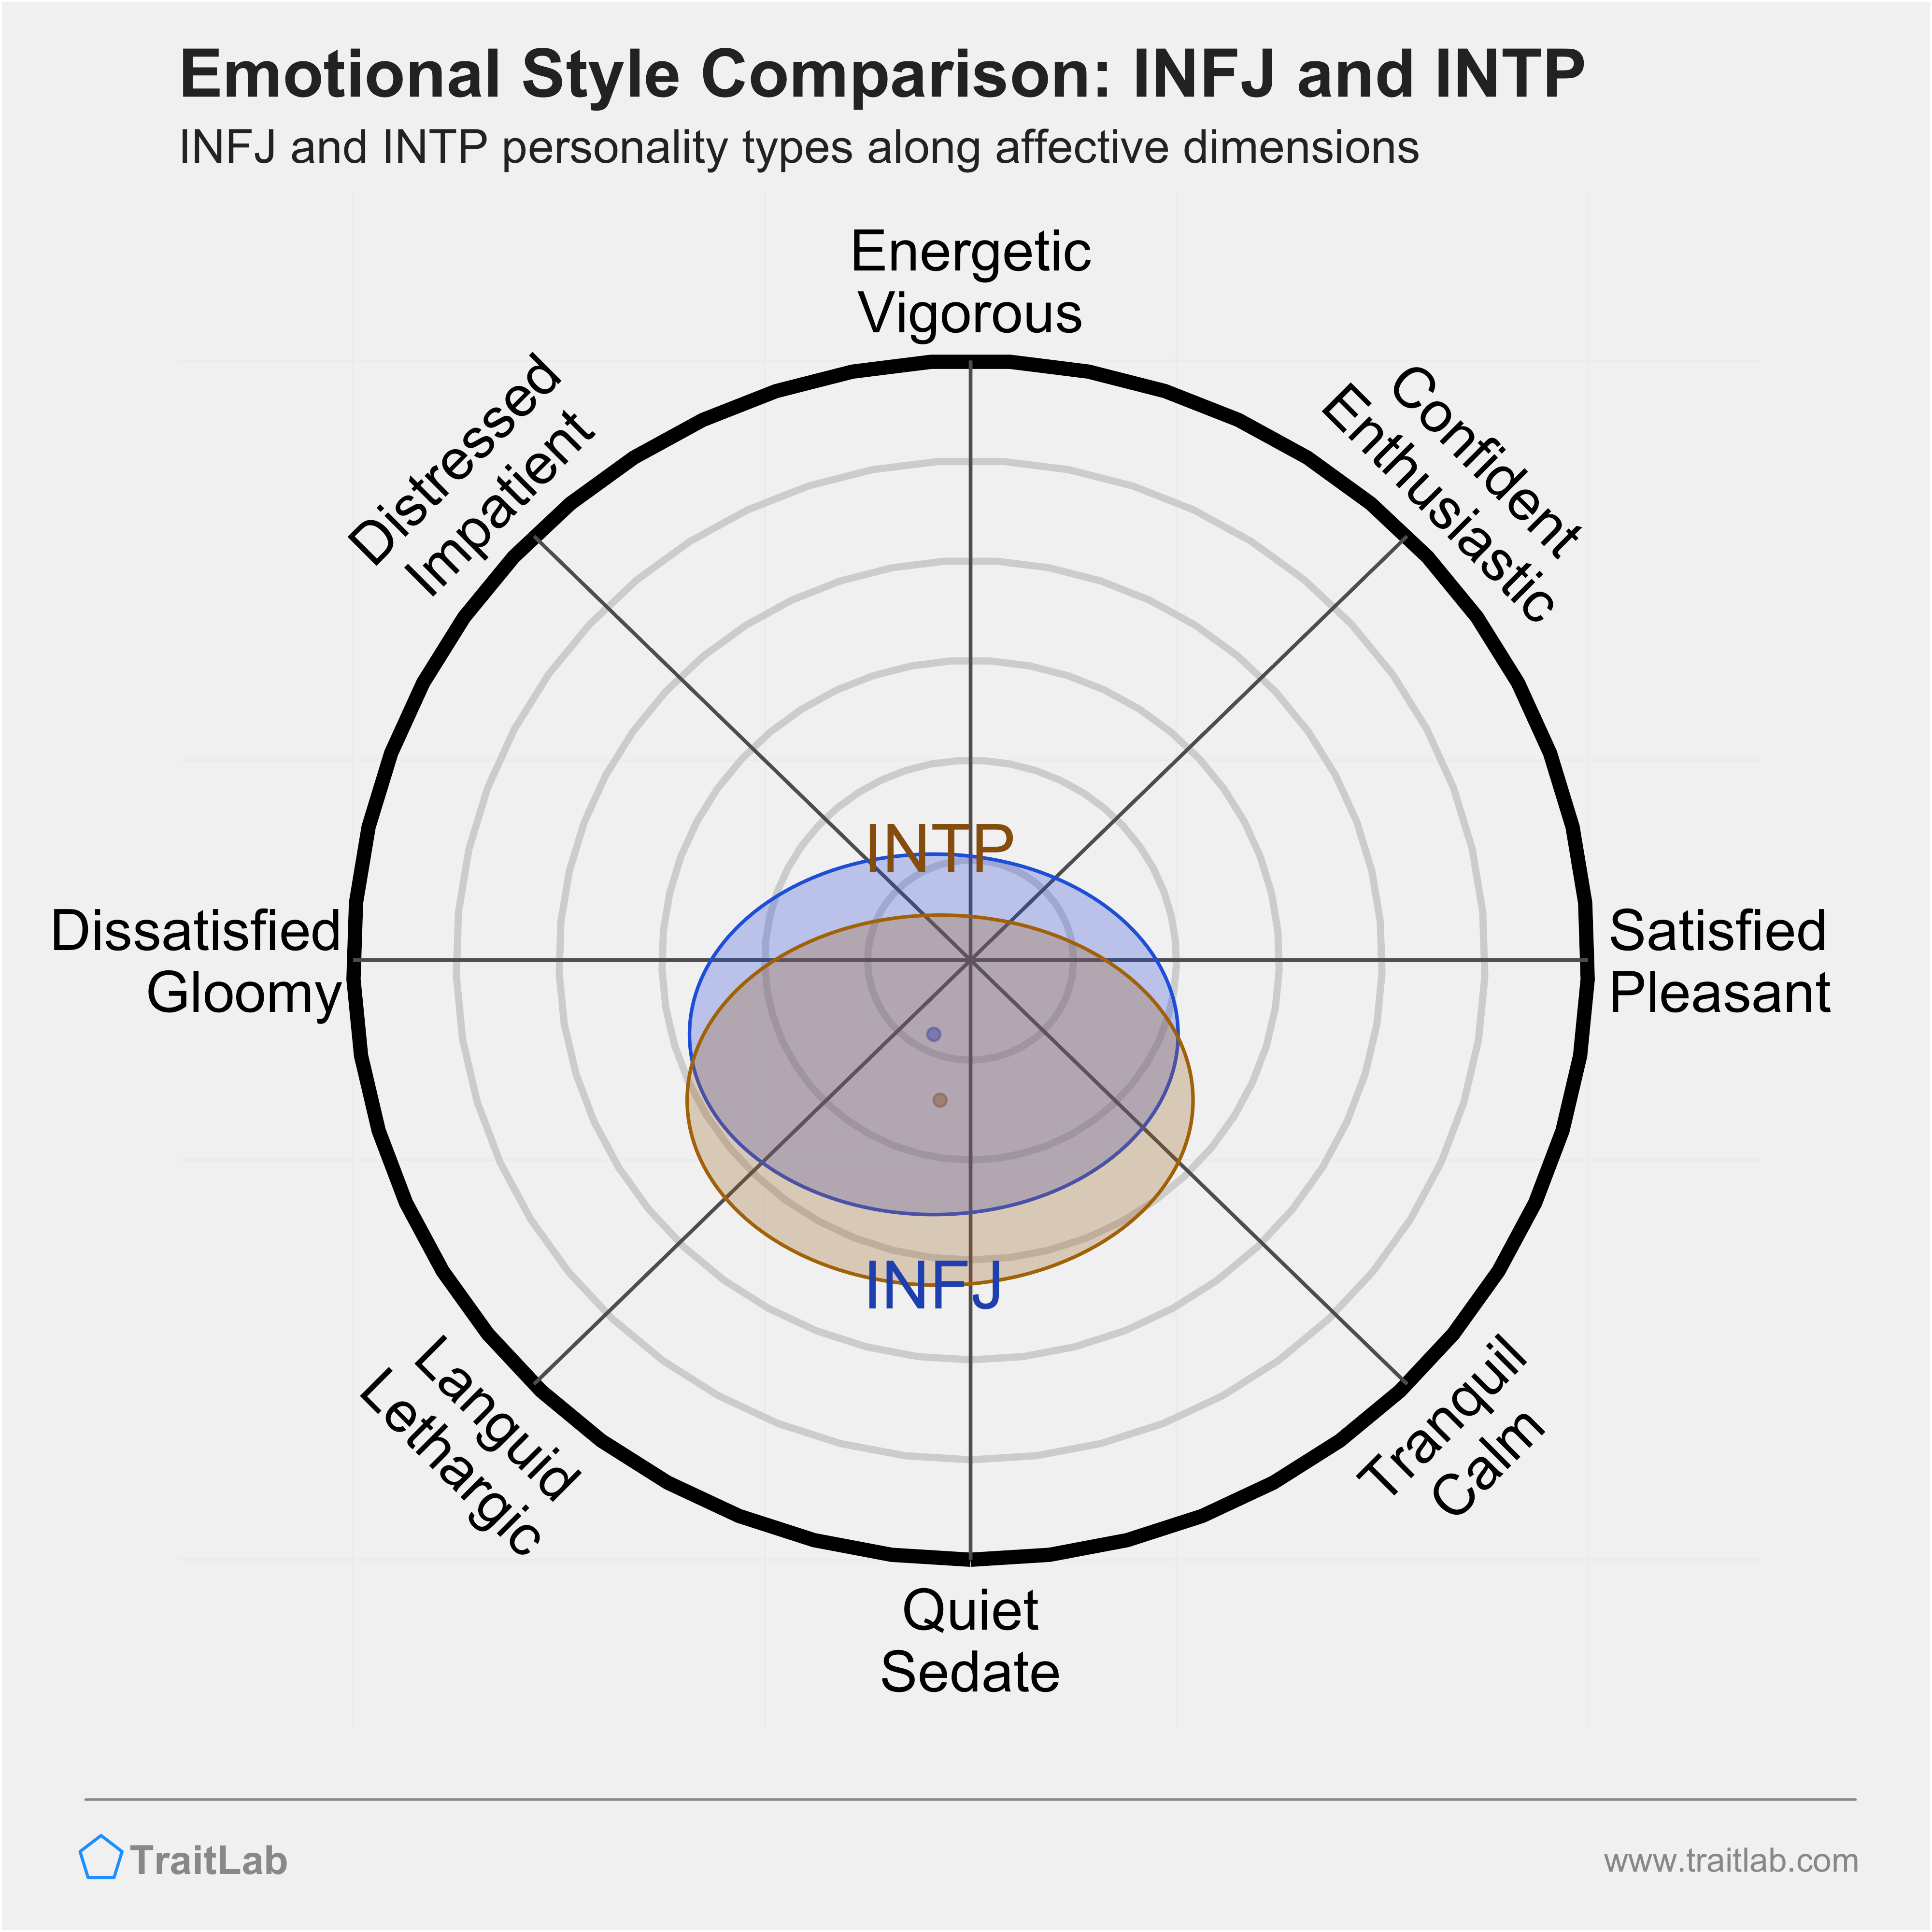 INFJ and INTP comparison across emotional (affective) dimensions